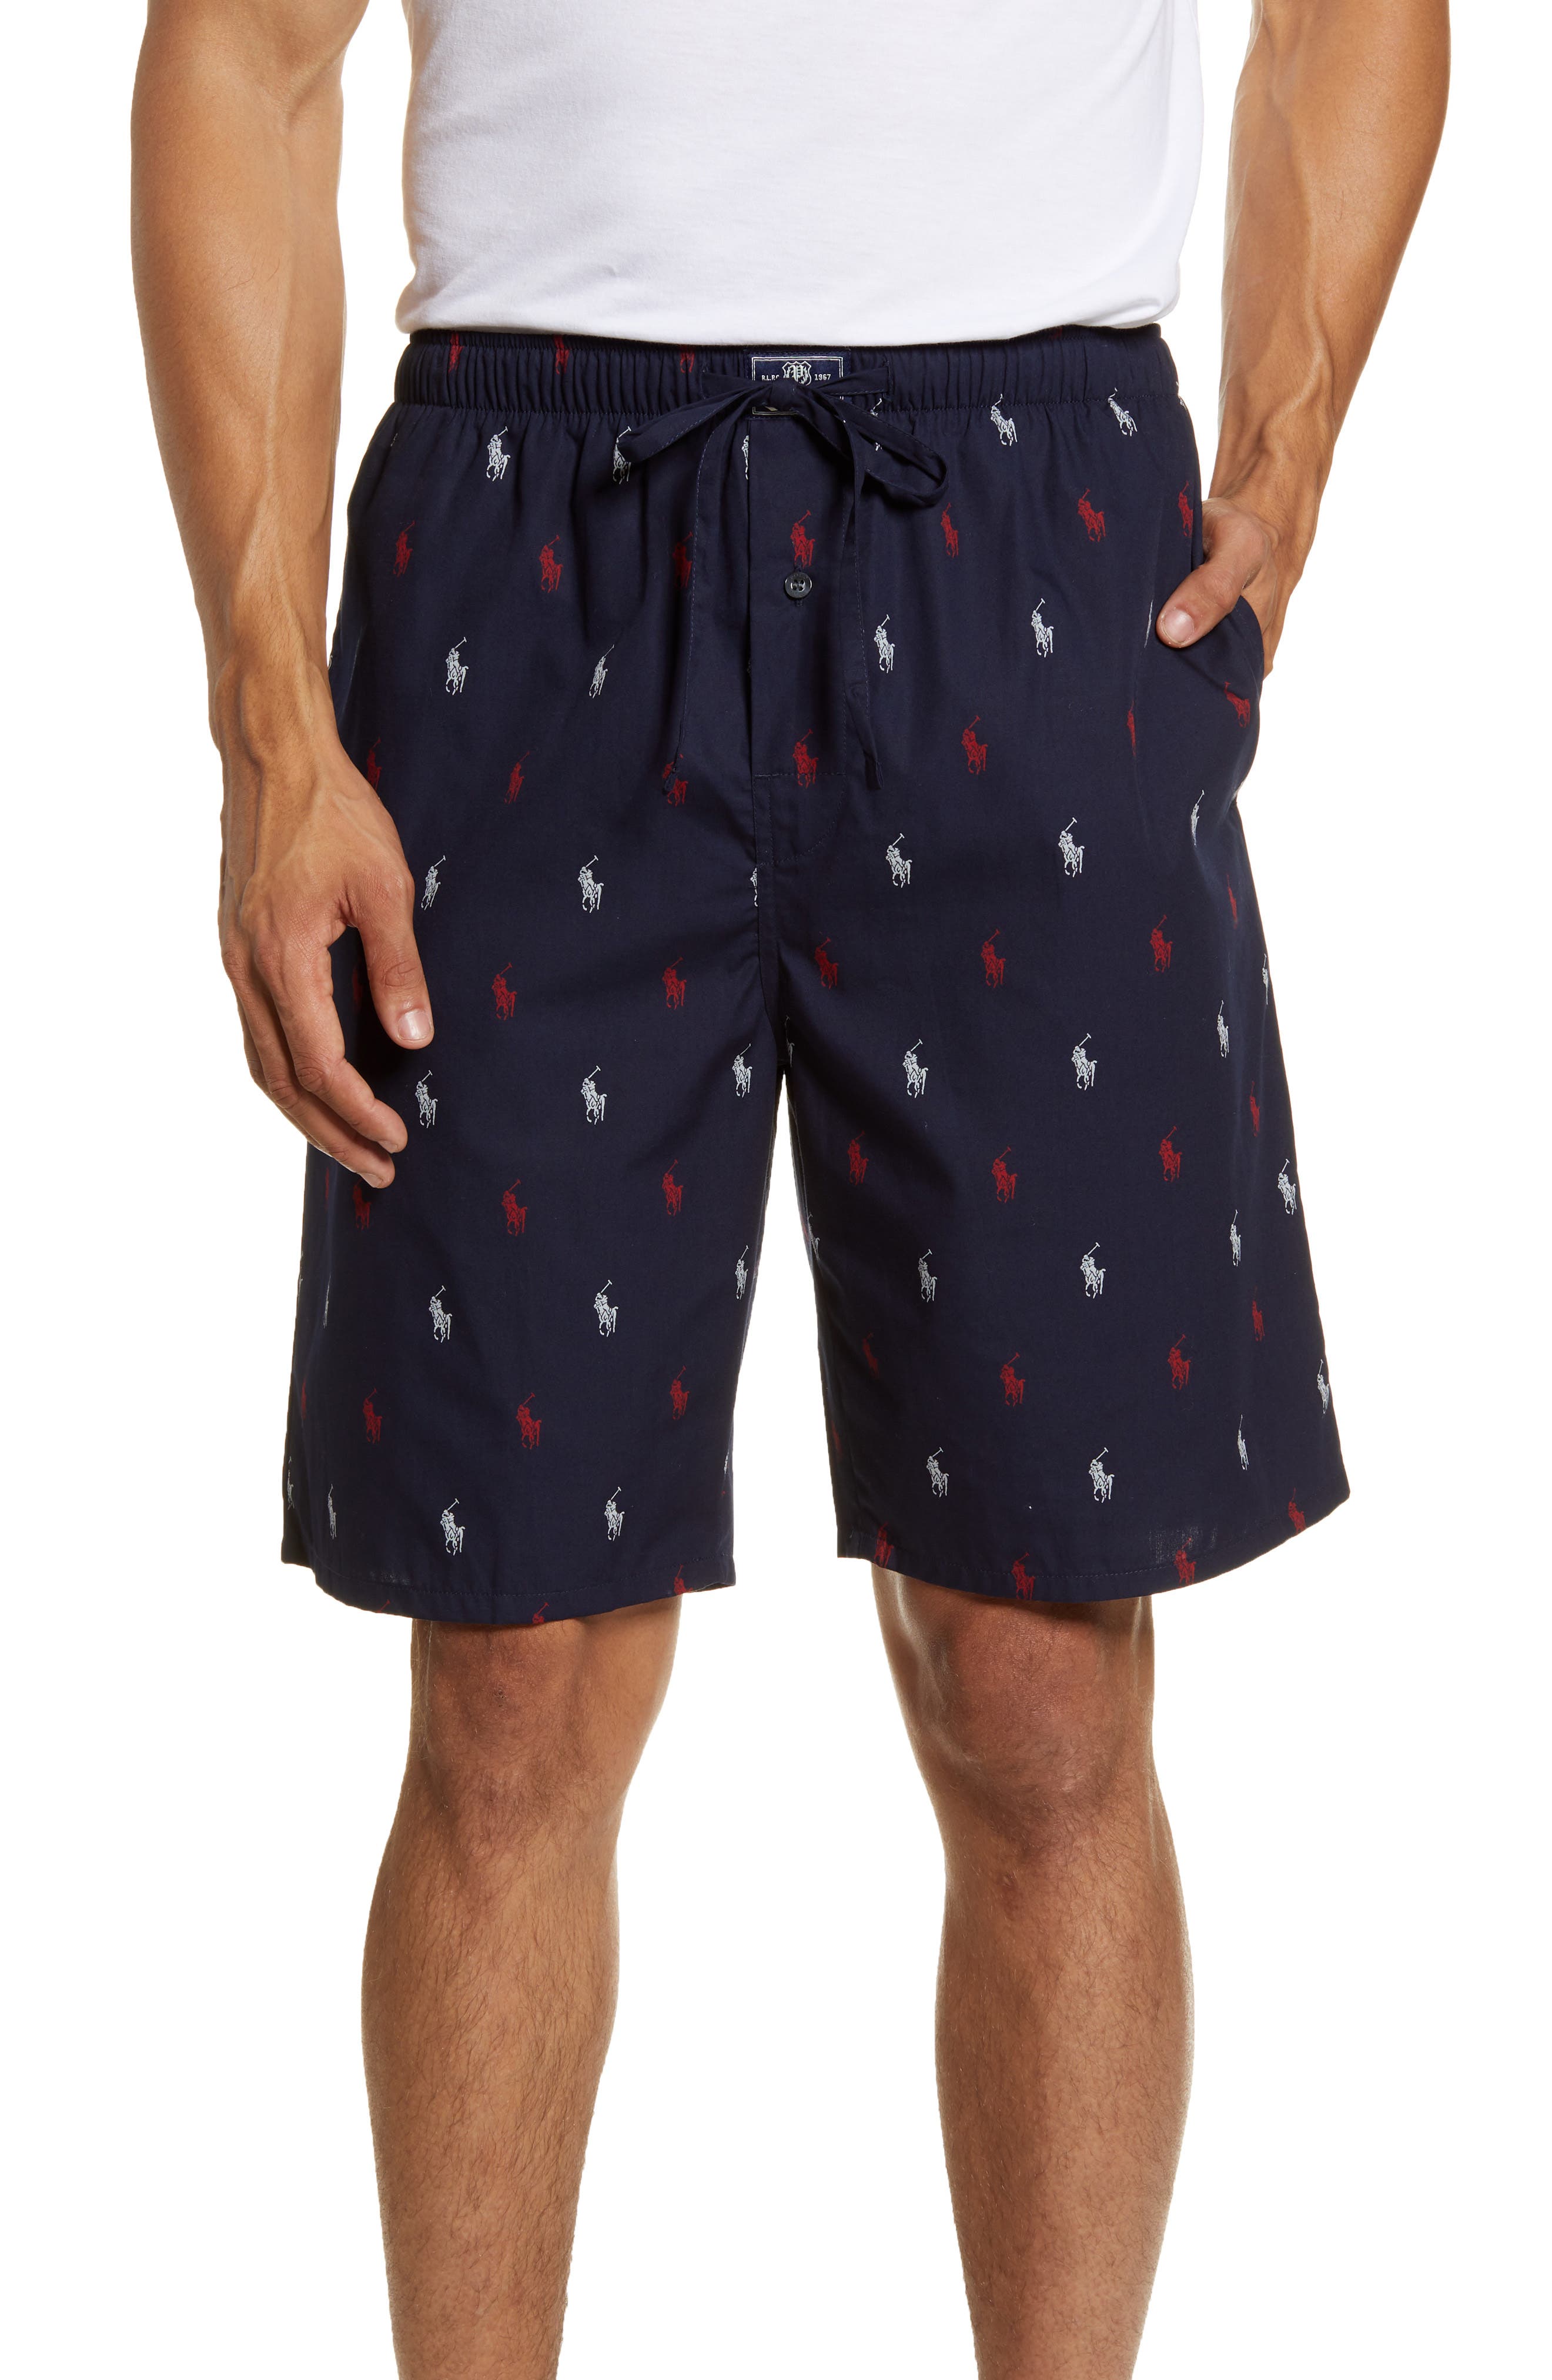 Rl Polo Shorts on Sale, 51% OFF | espirituviajero.com